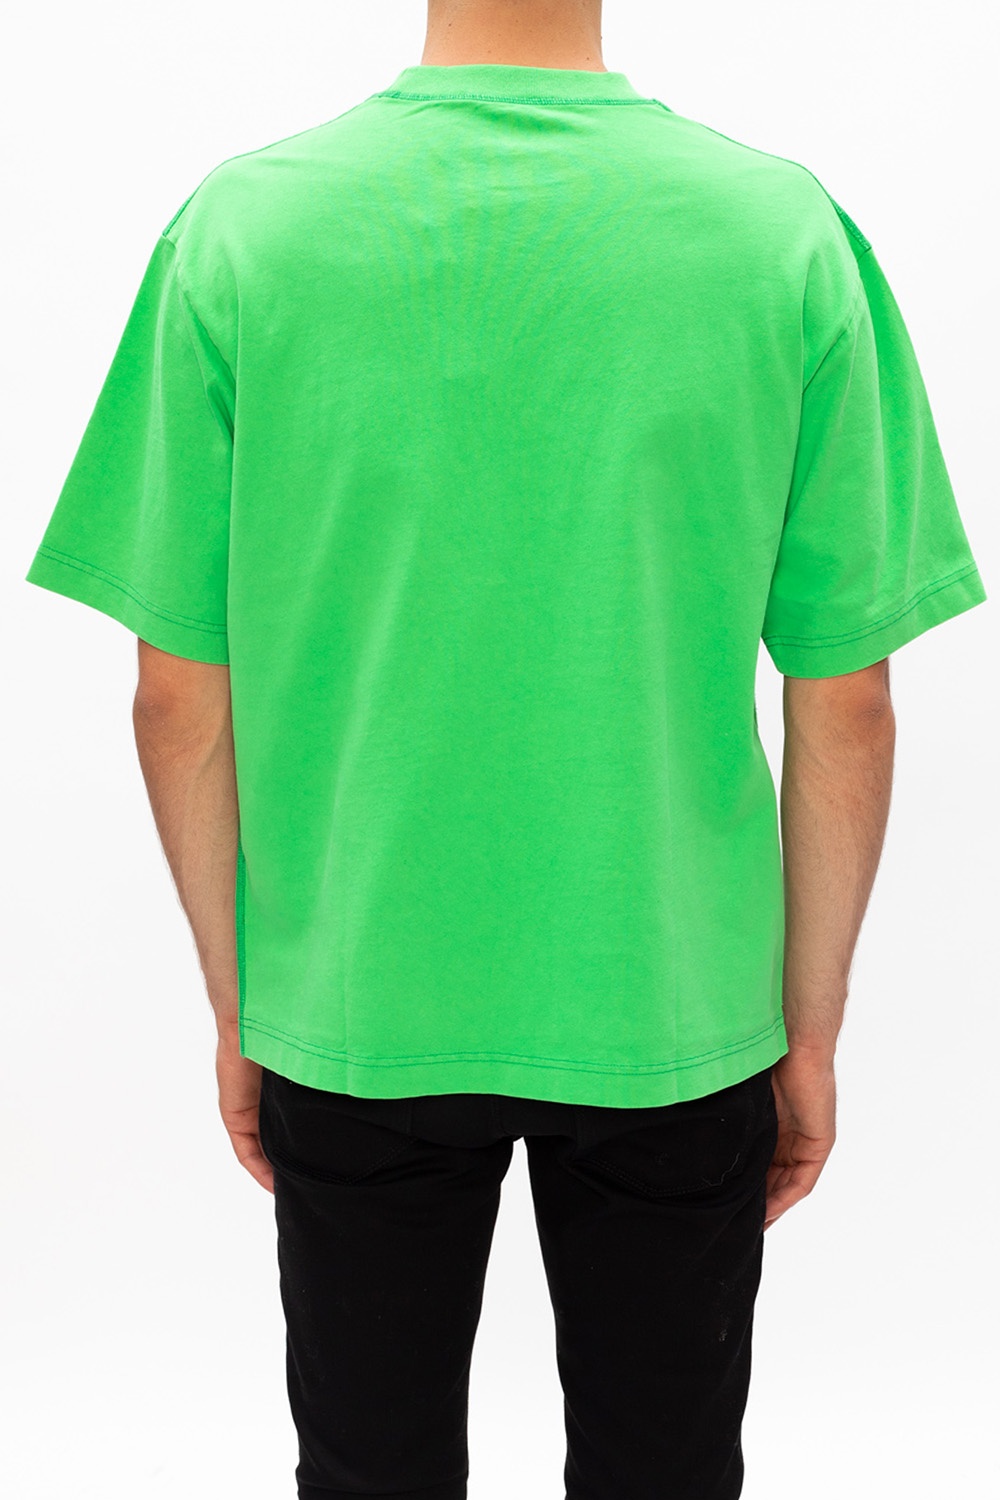 T-shirt Color green - SINSAY - 8155J-77X